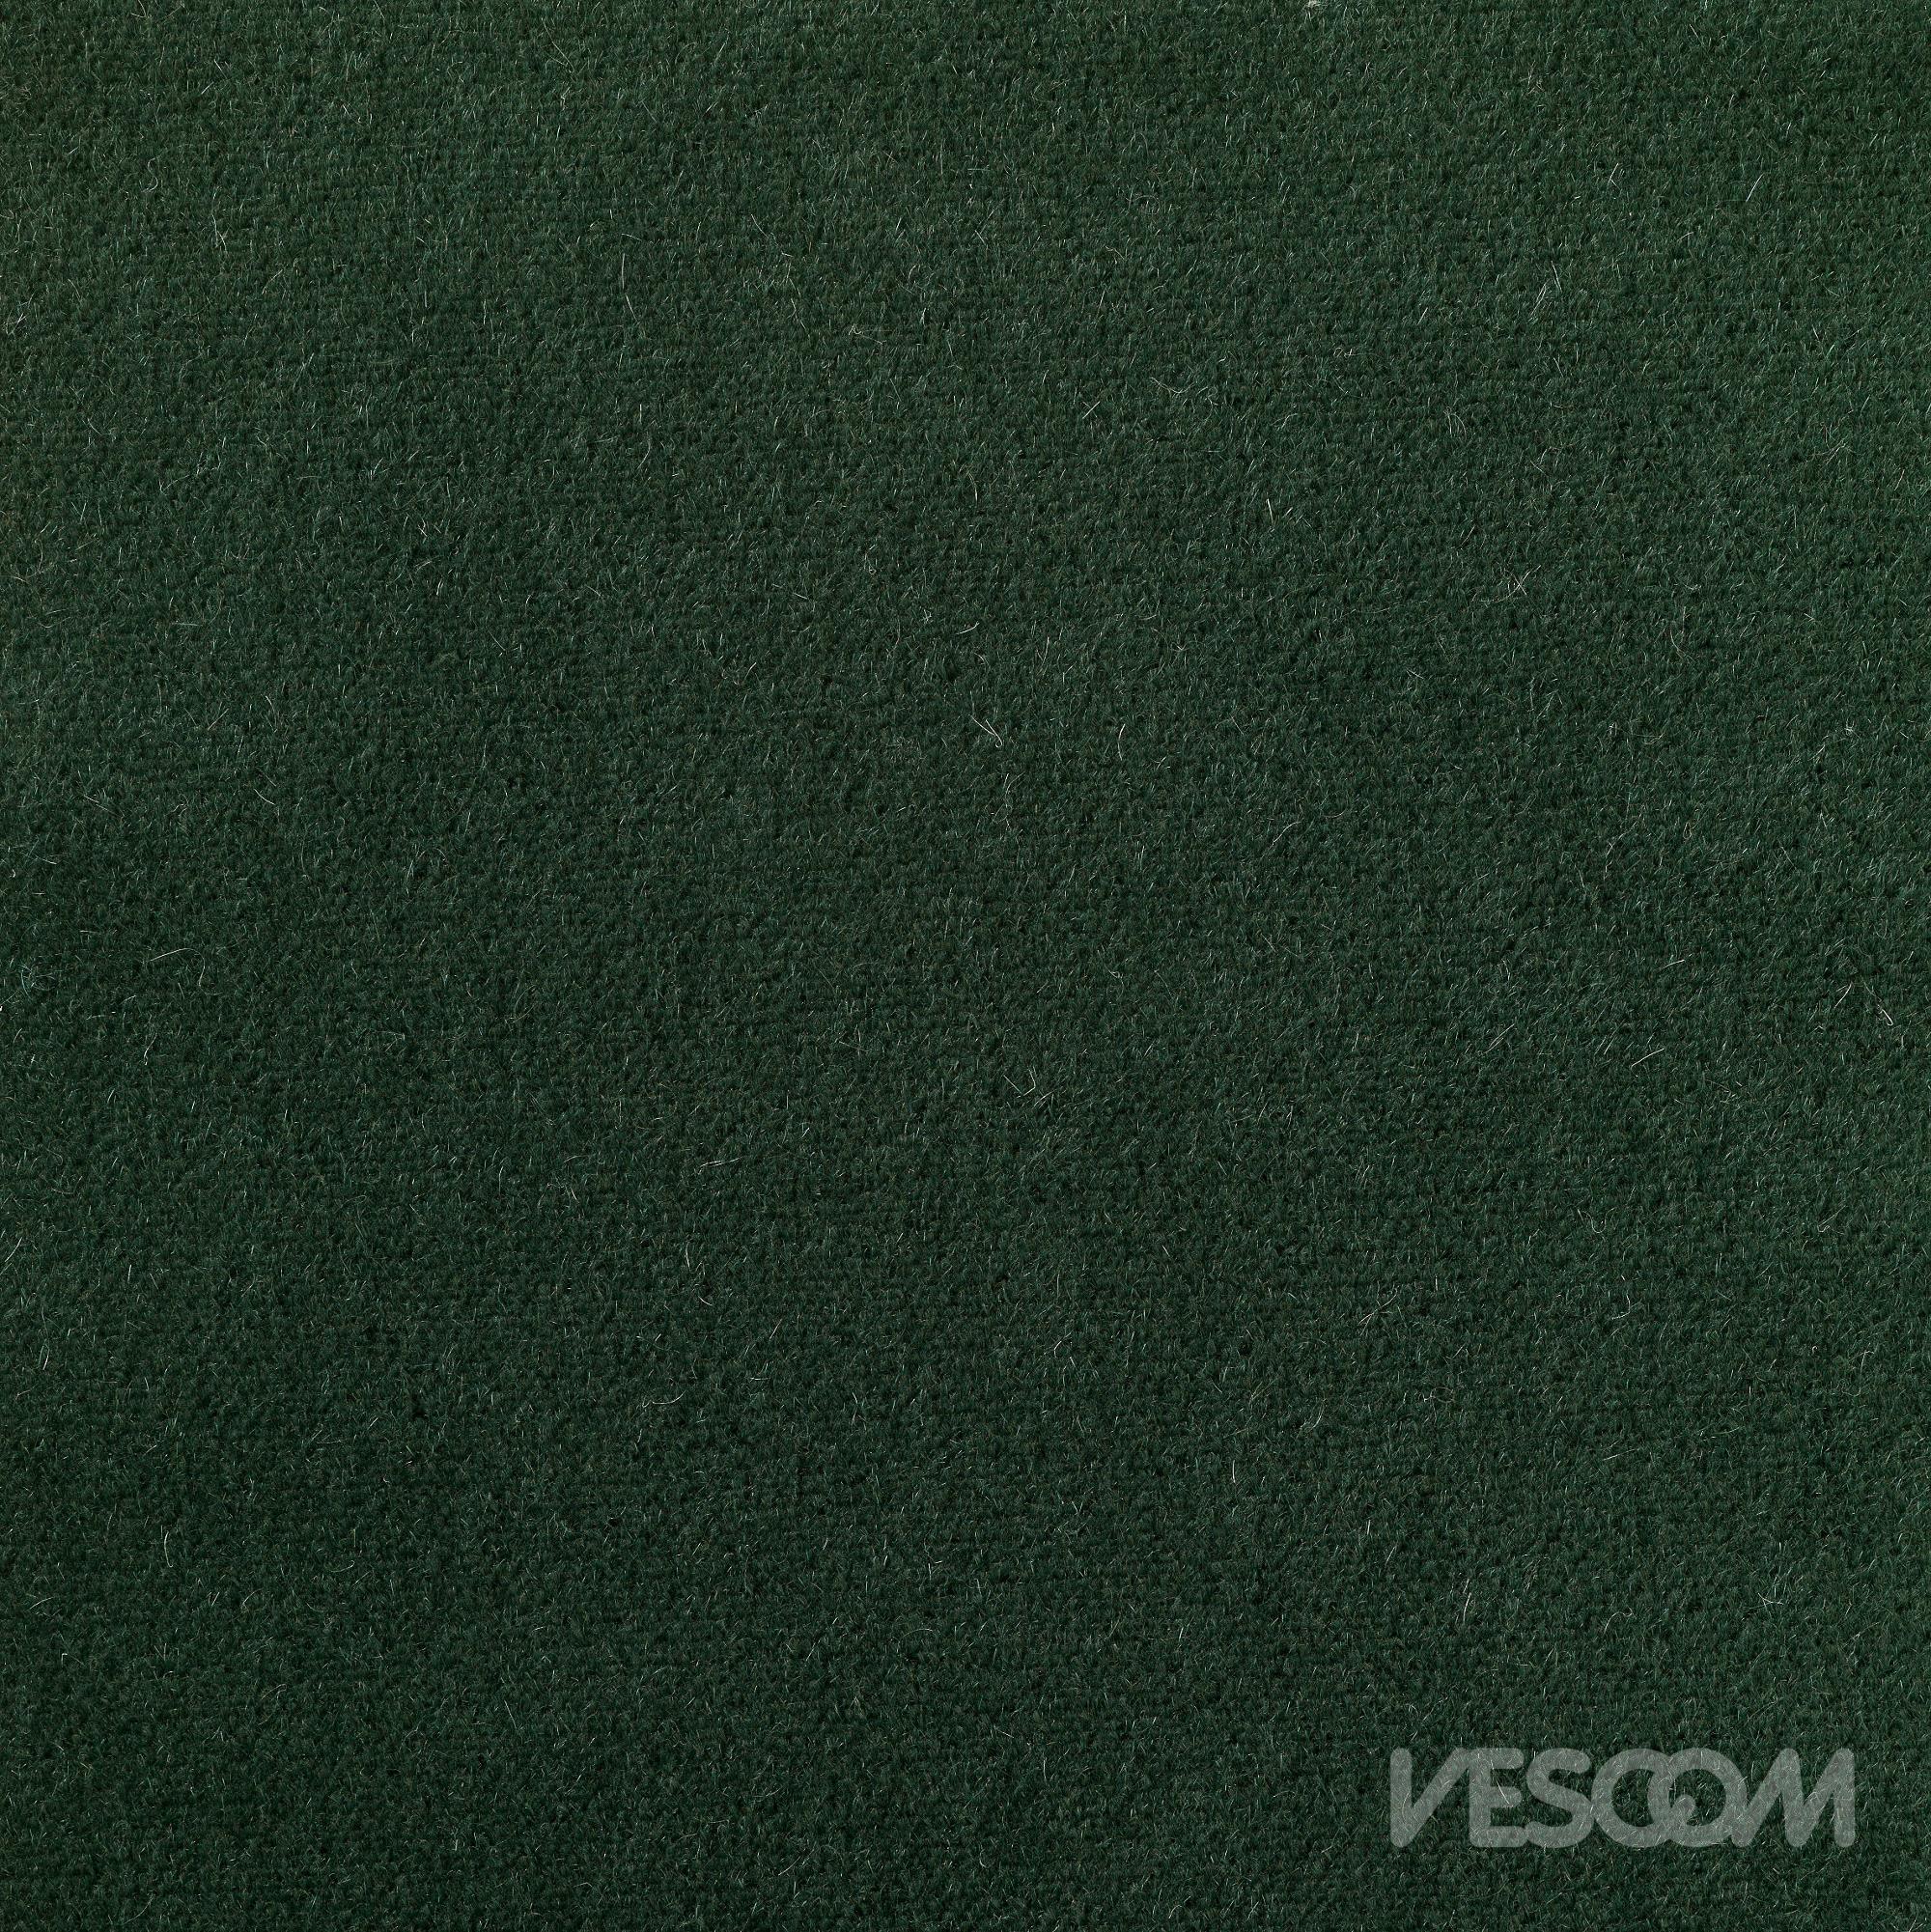 Vescom Ariana Upholstery Fabric 7061.04